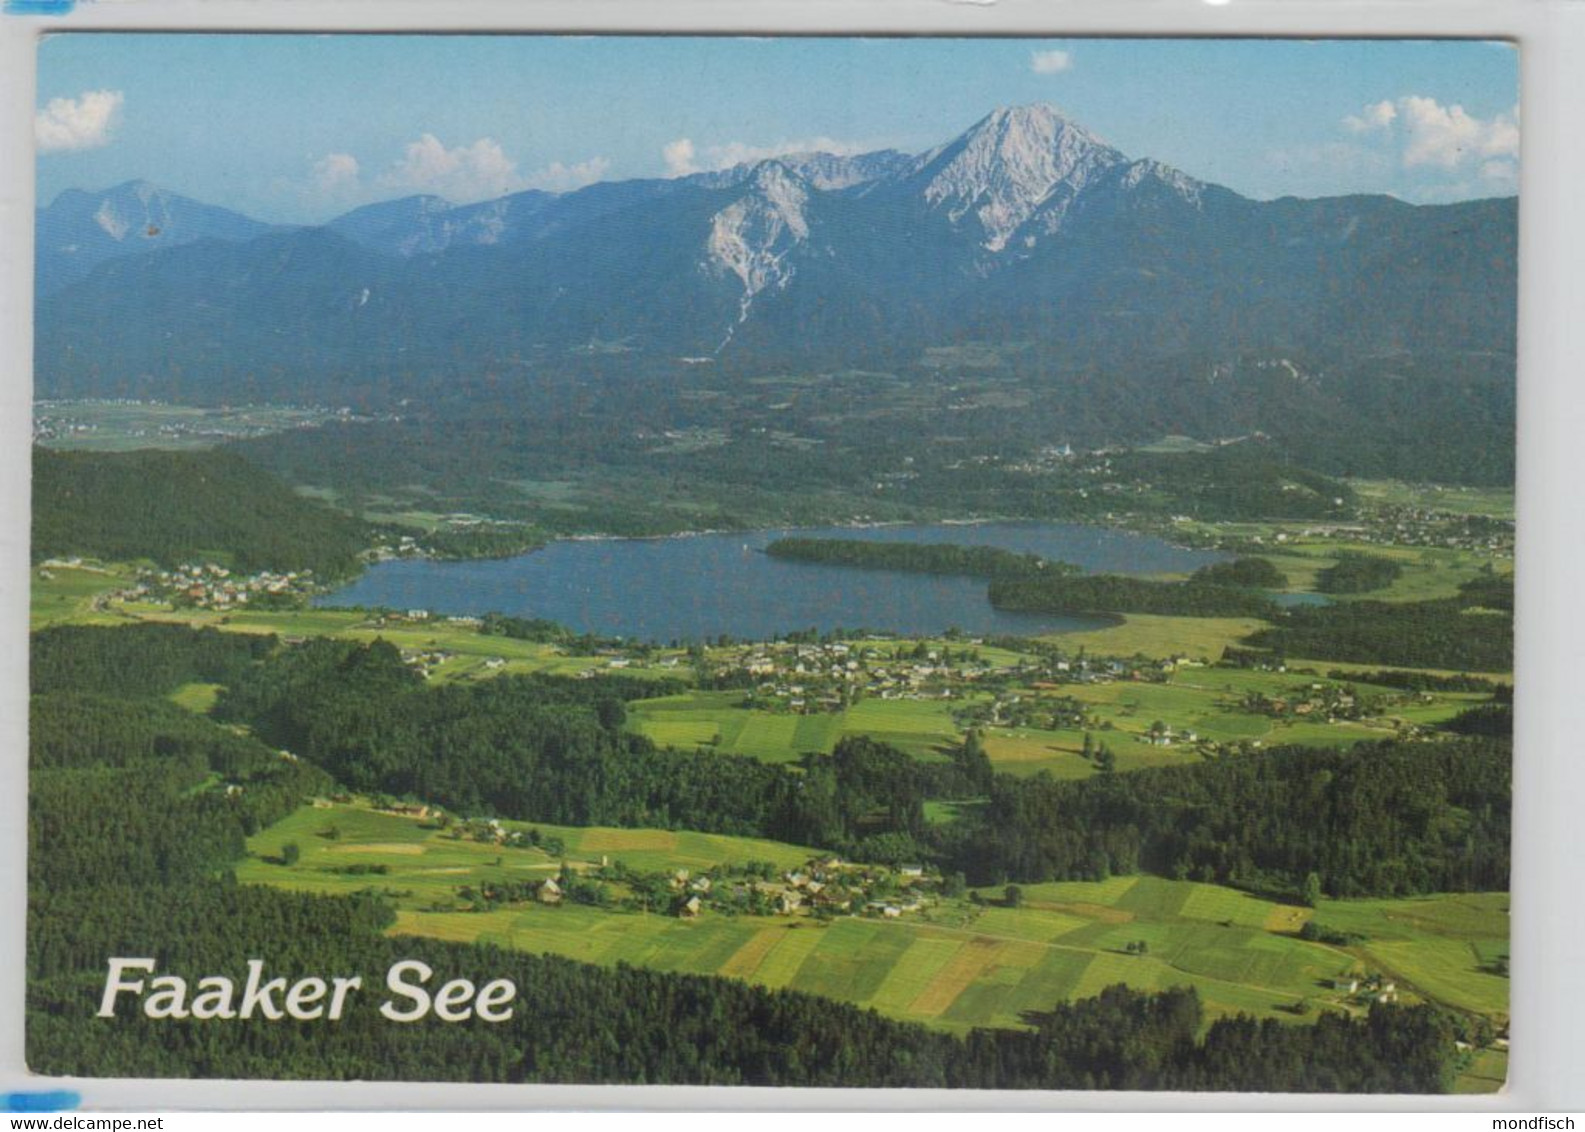 Faaker See - Luftbild - Faakersee-Orte